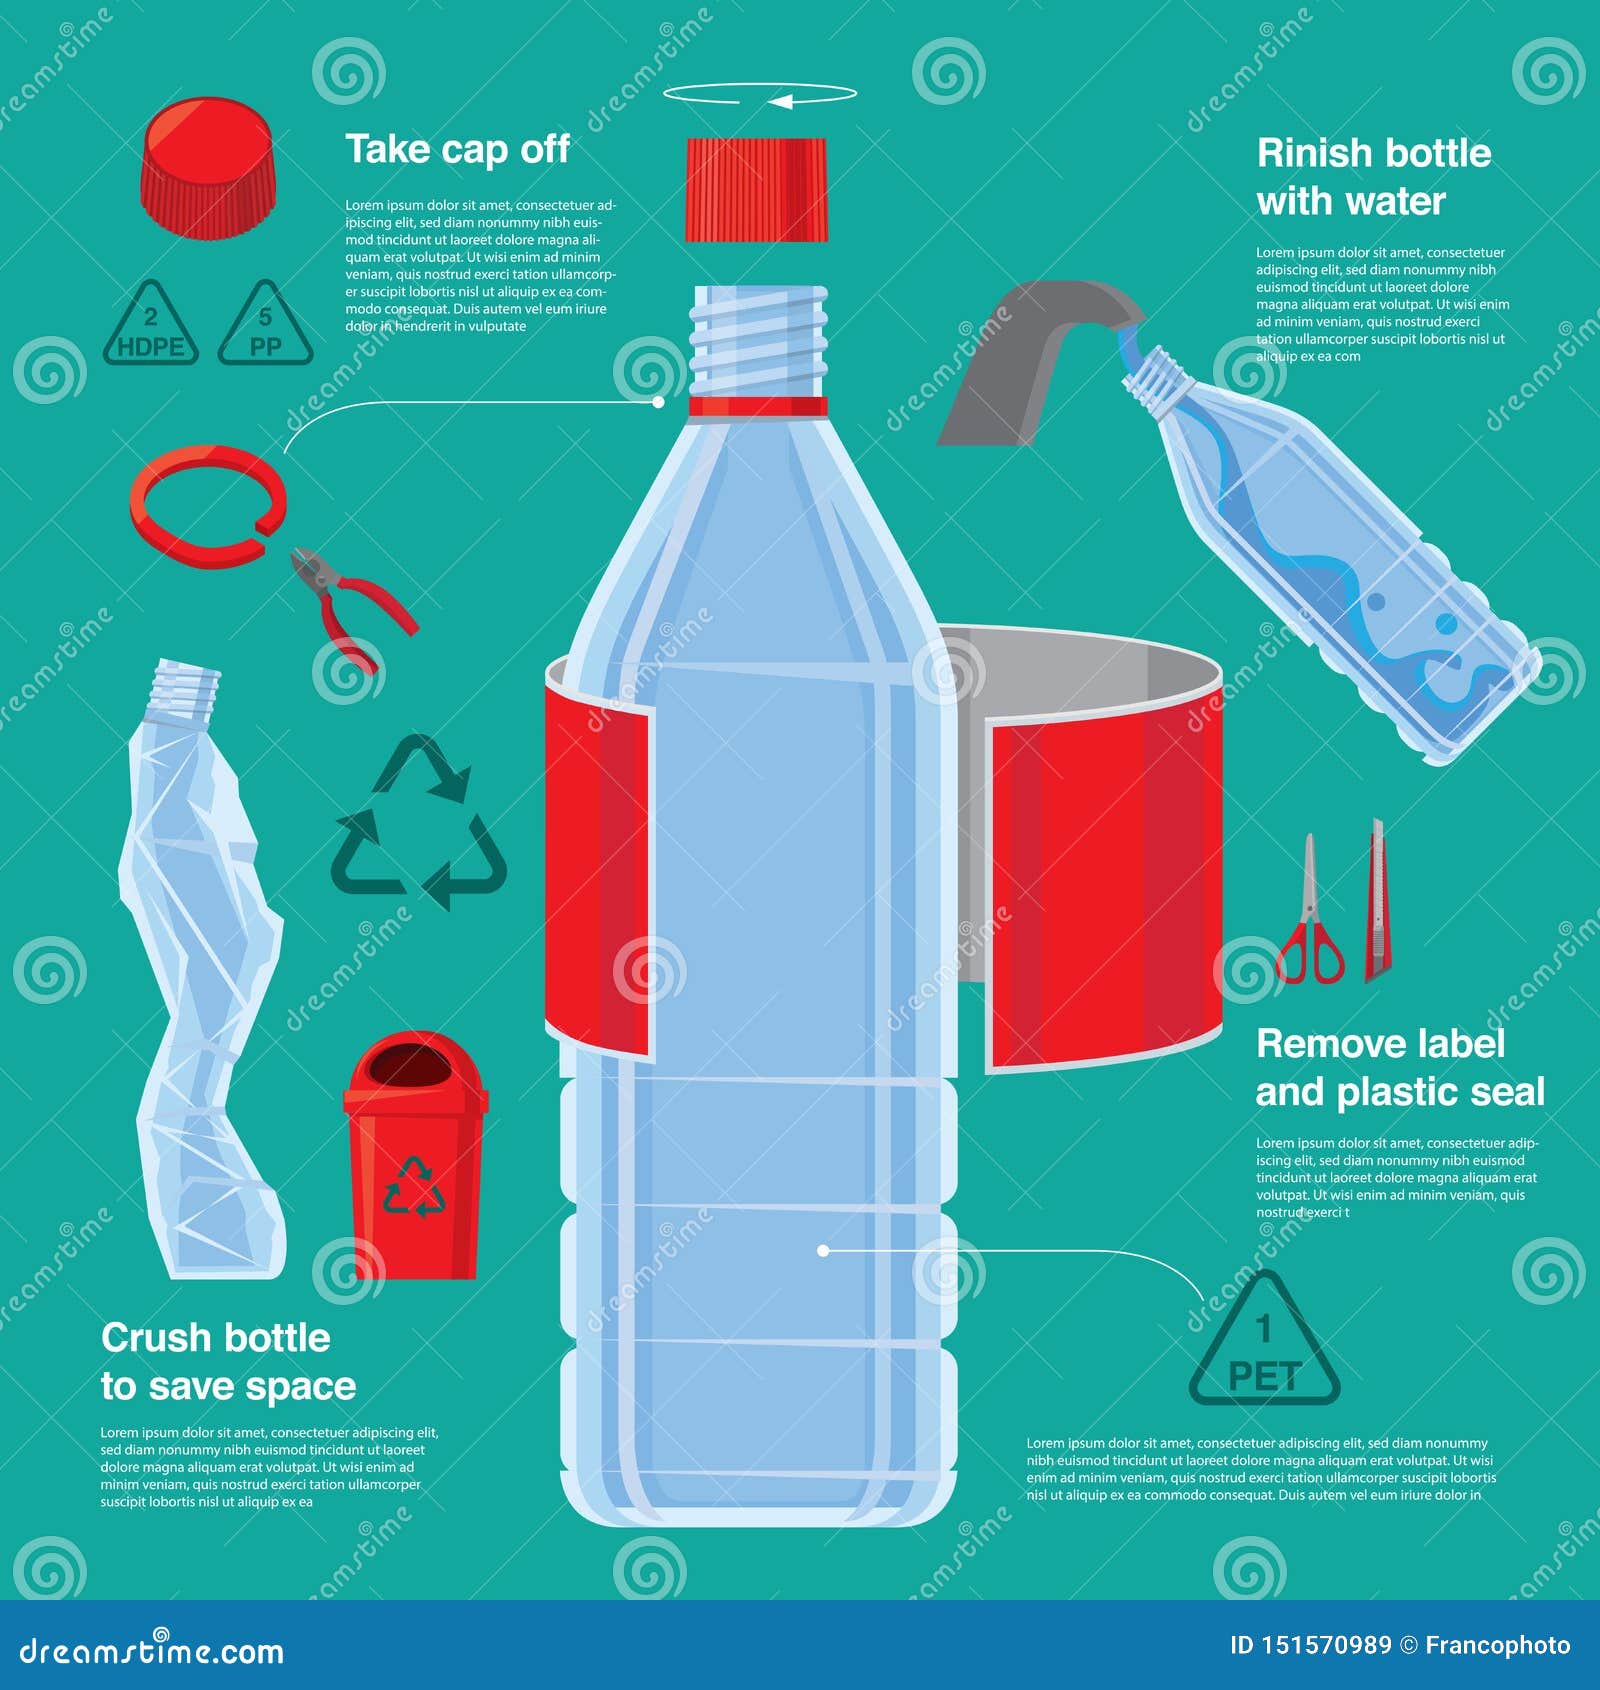 PET bottle label remover for plastic bottle recycling plant